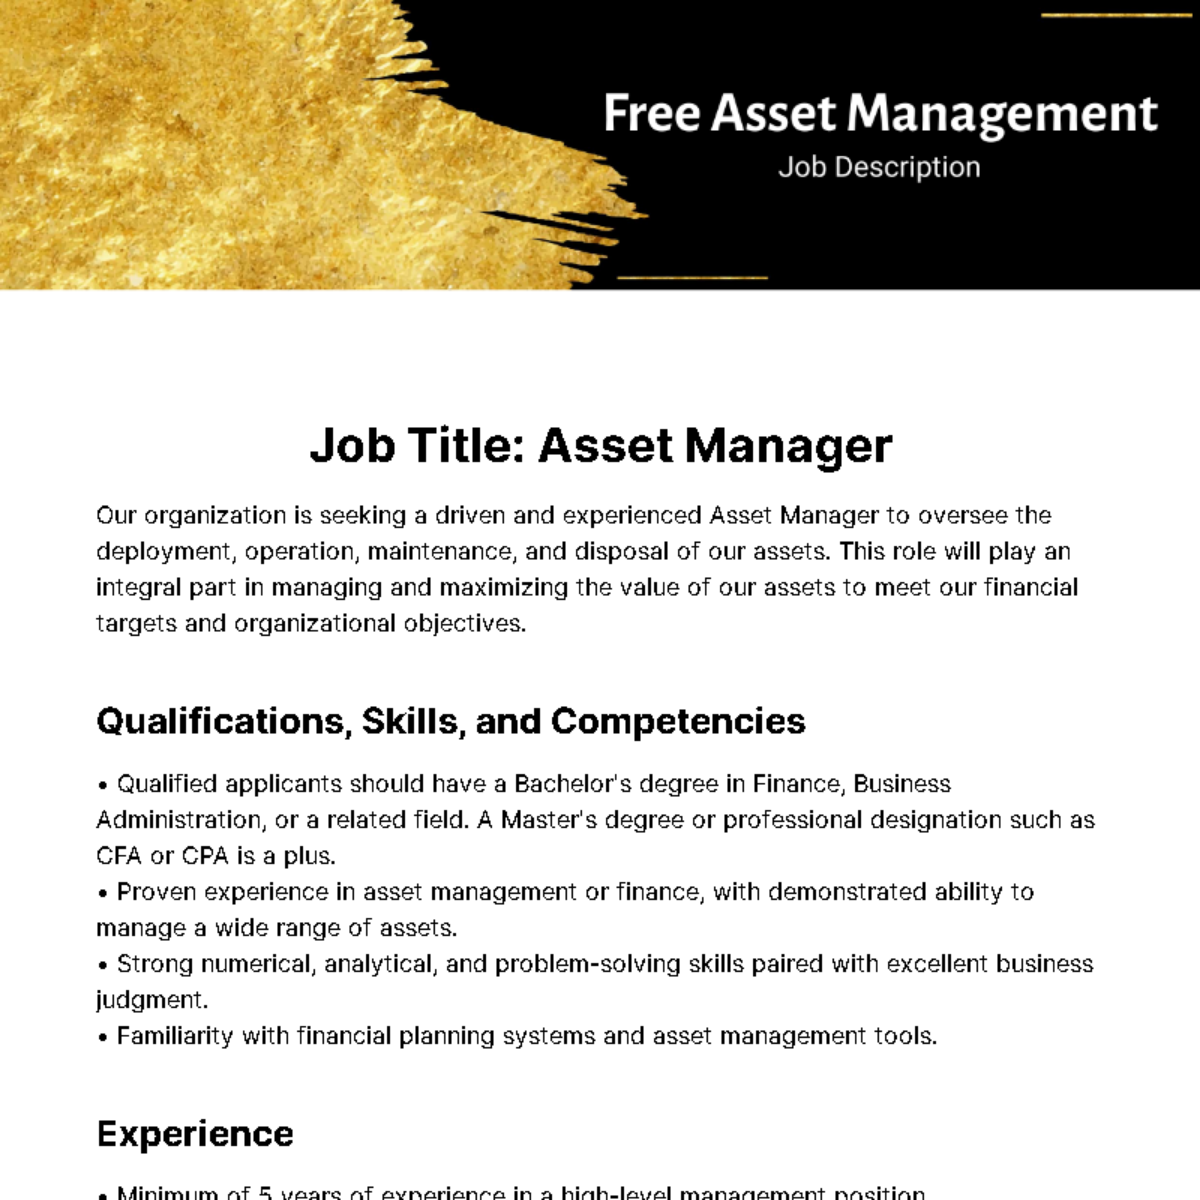 Free Asset Management Job Description Template